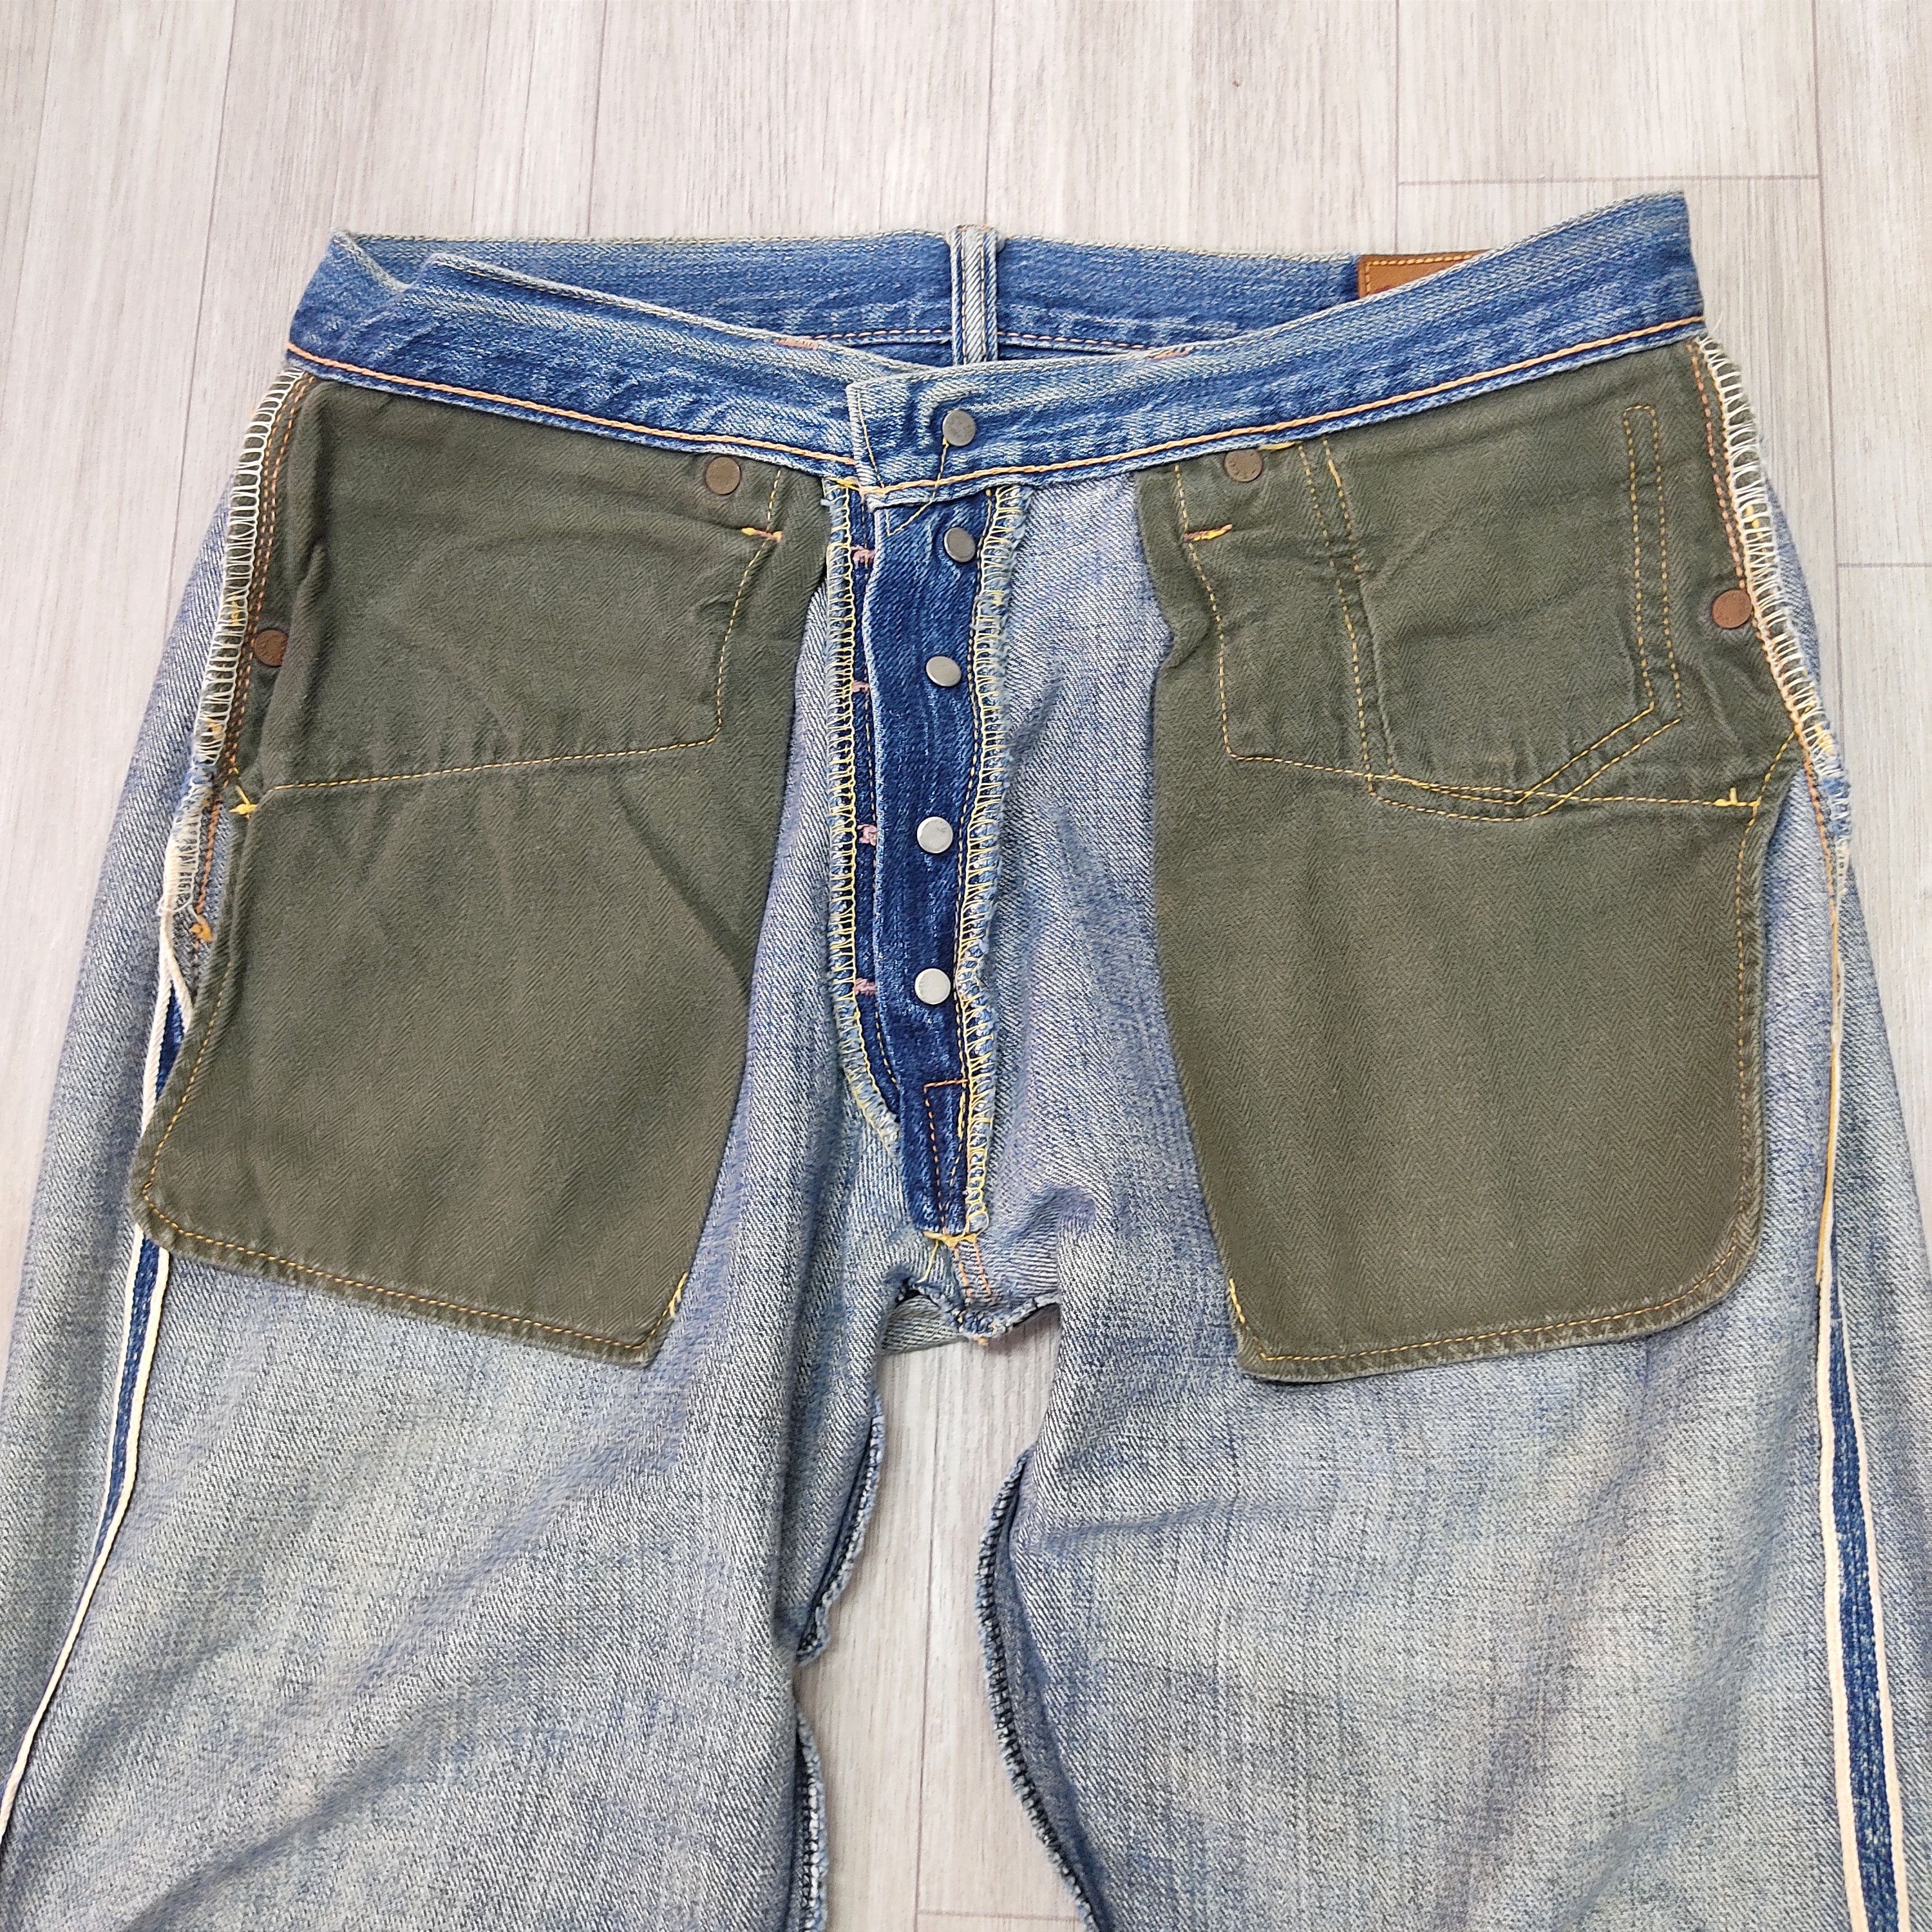 Vintage Cloze Jeans Japanese Selvedge Denim Pants - 14